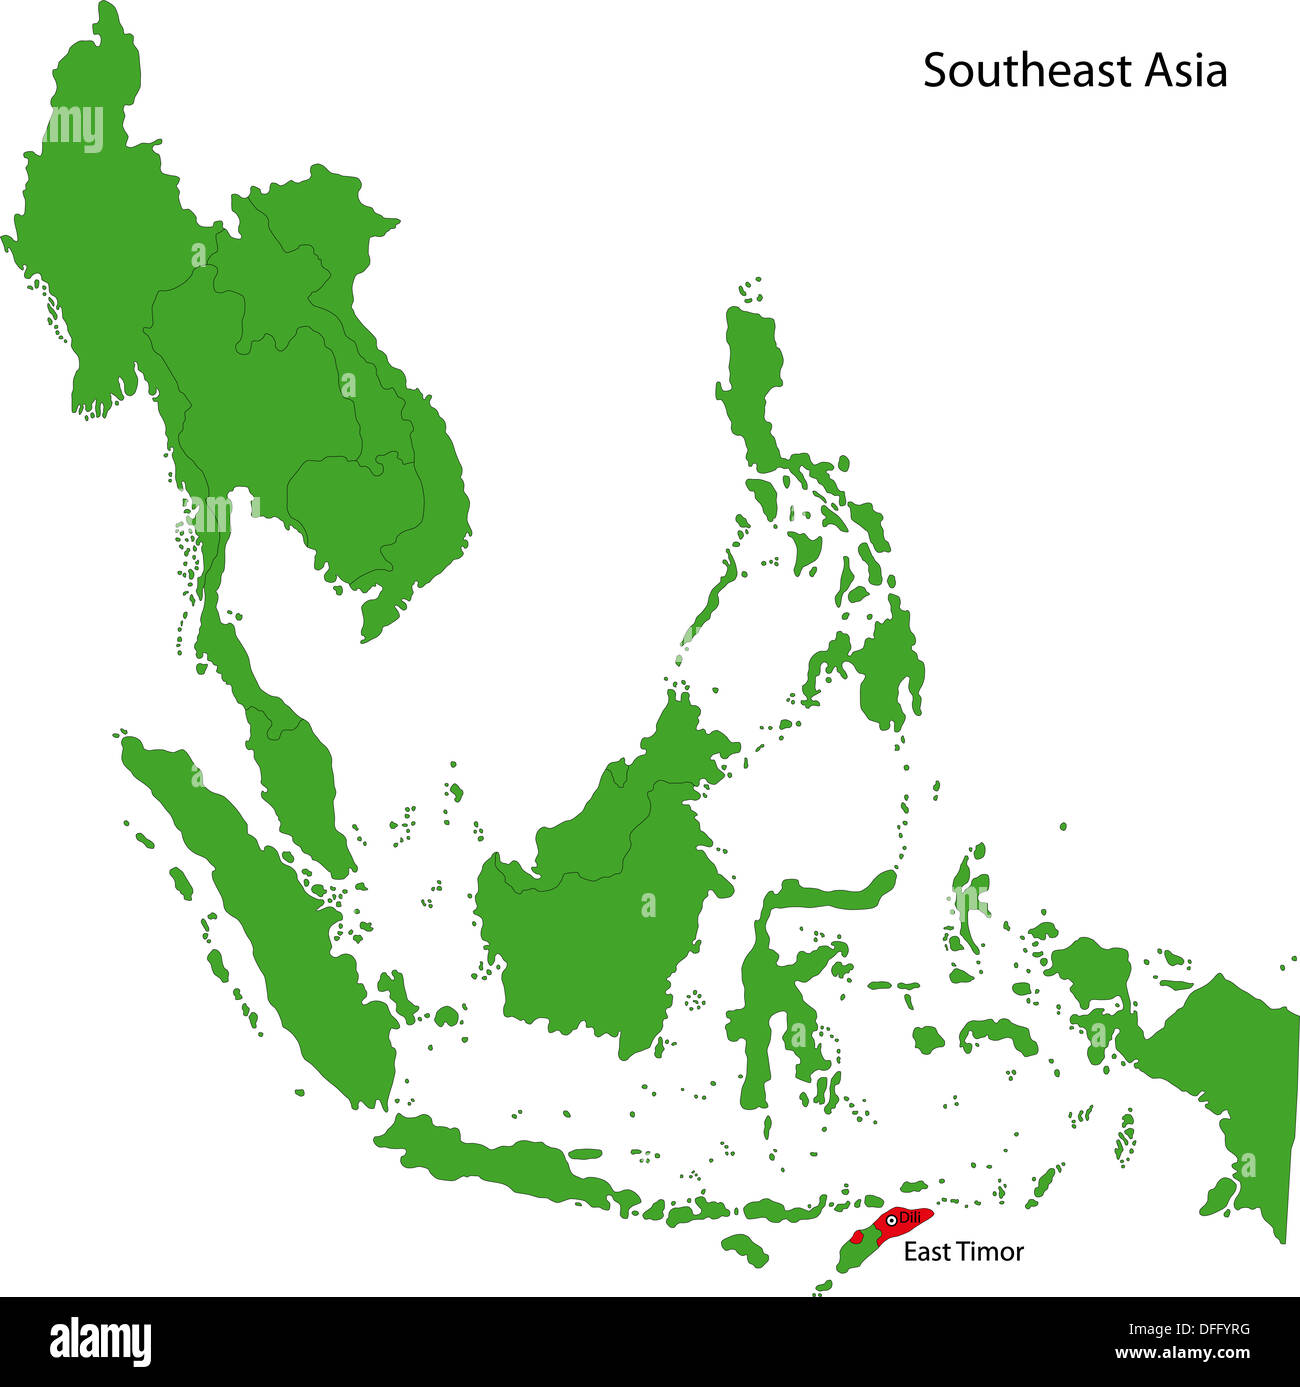 East Timor map Stock Photo